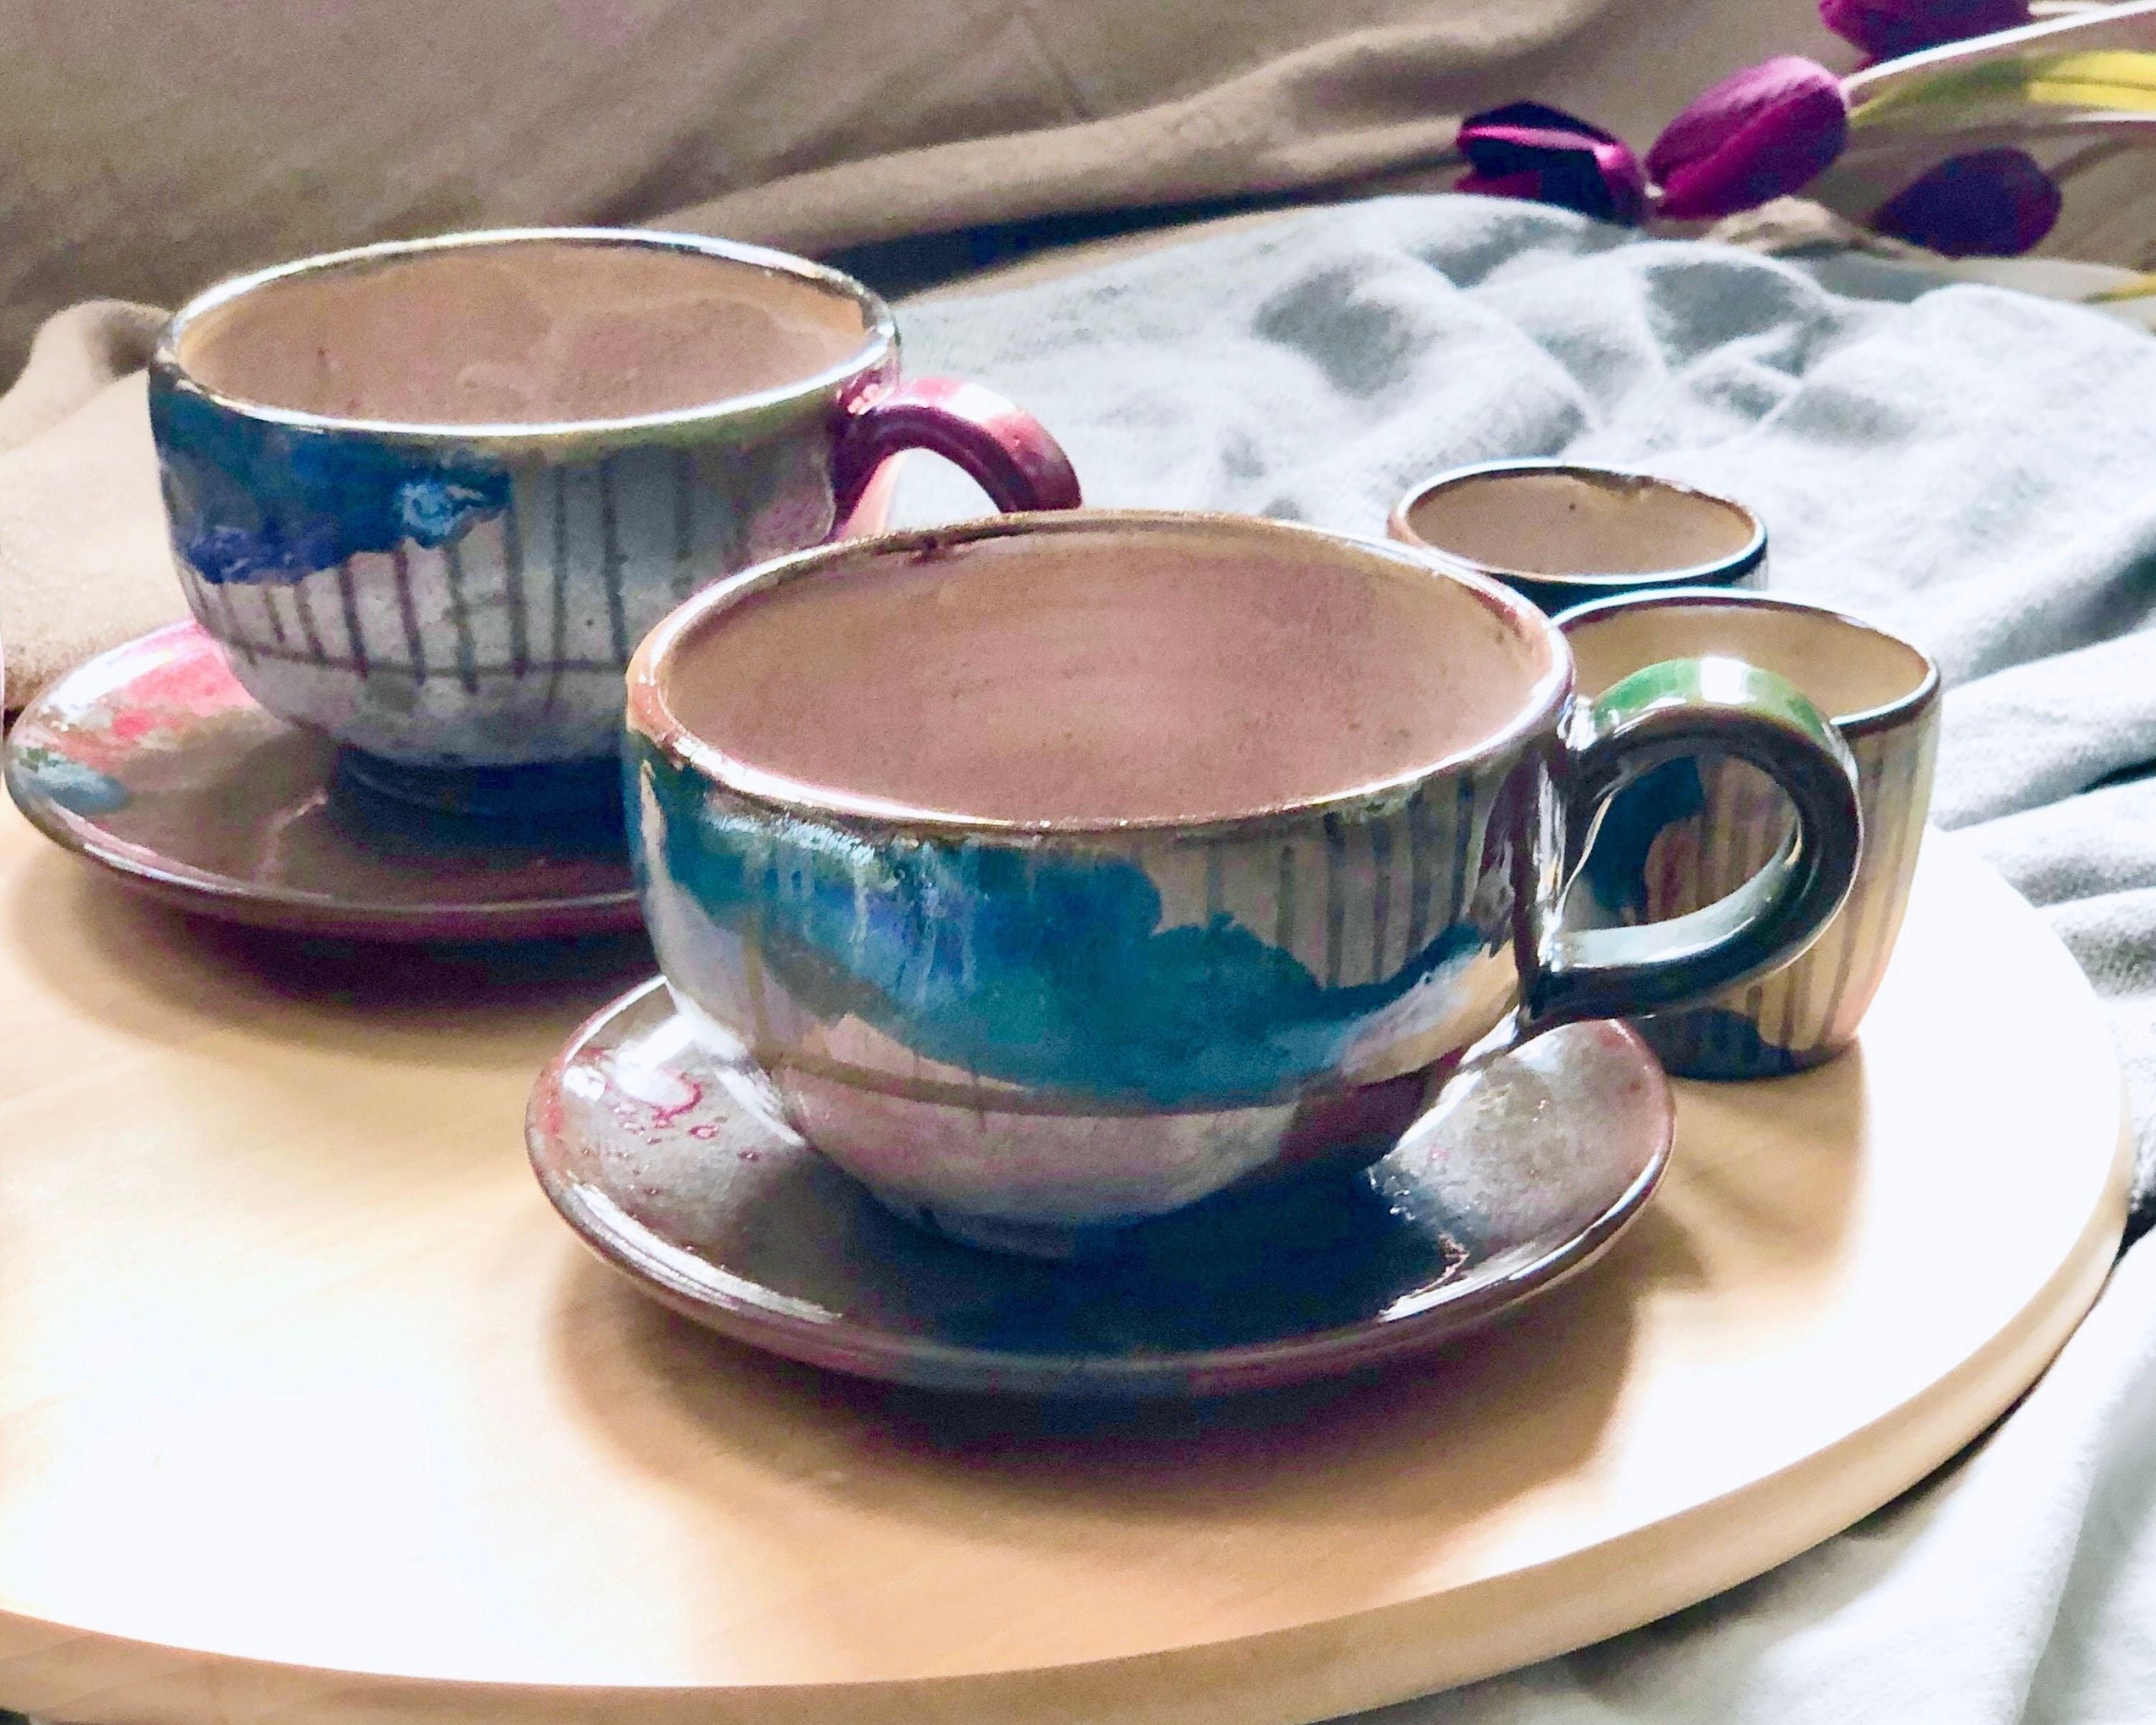 Yundu Porcelain Latte Cup and Saucer - 10 oz for Cappuccino,Tea,Cafe Mocha,  Set of 4,Matte Mixed Color